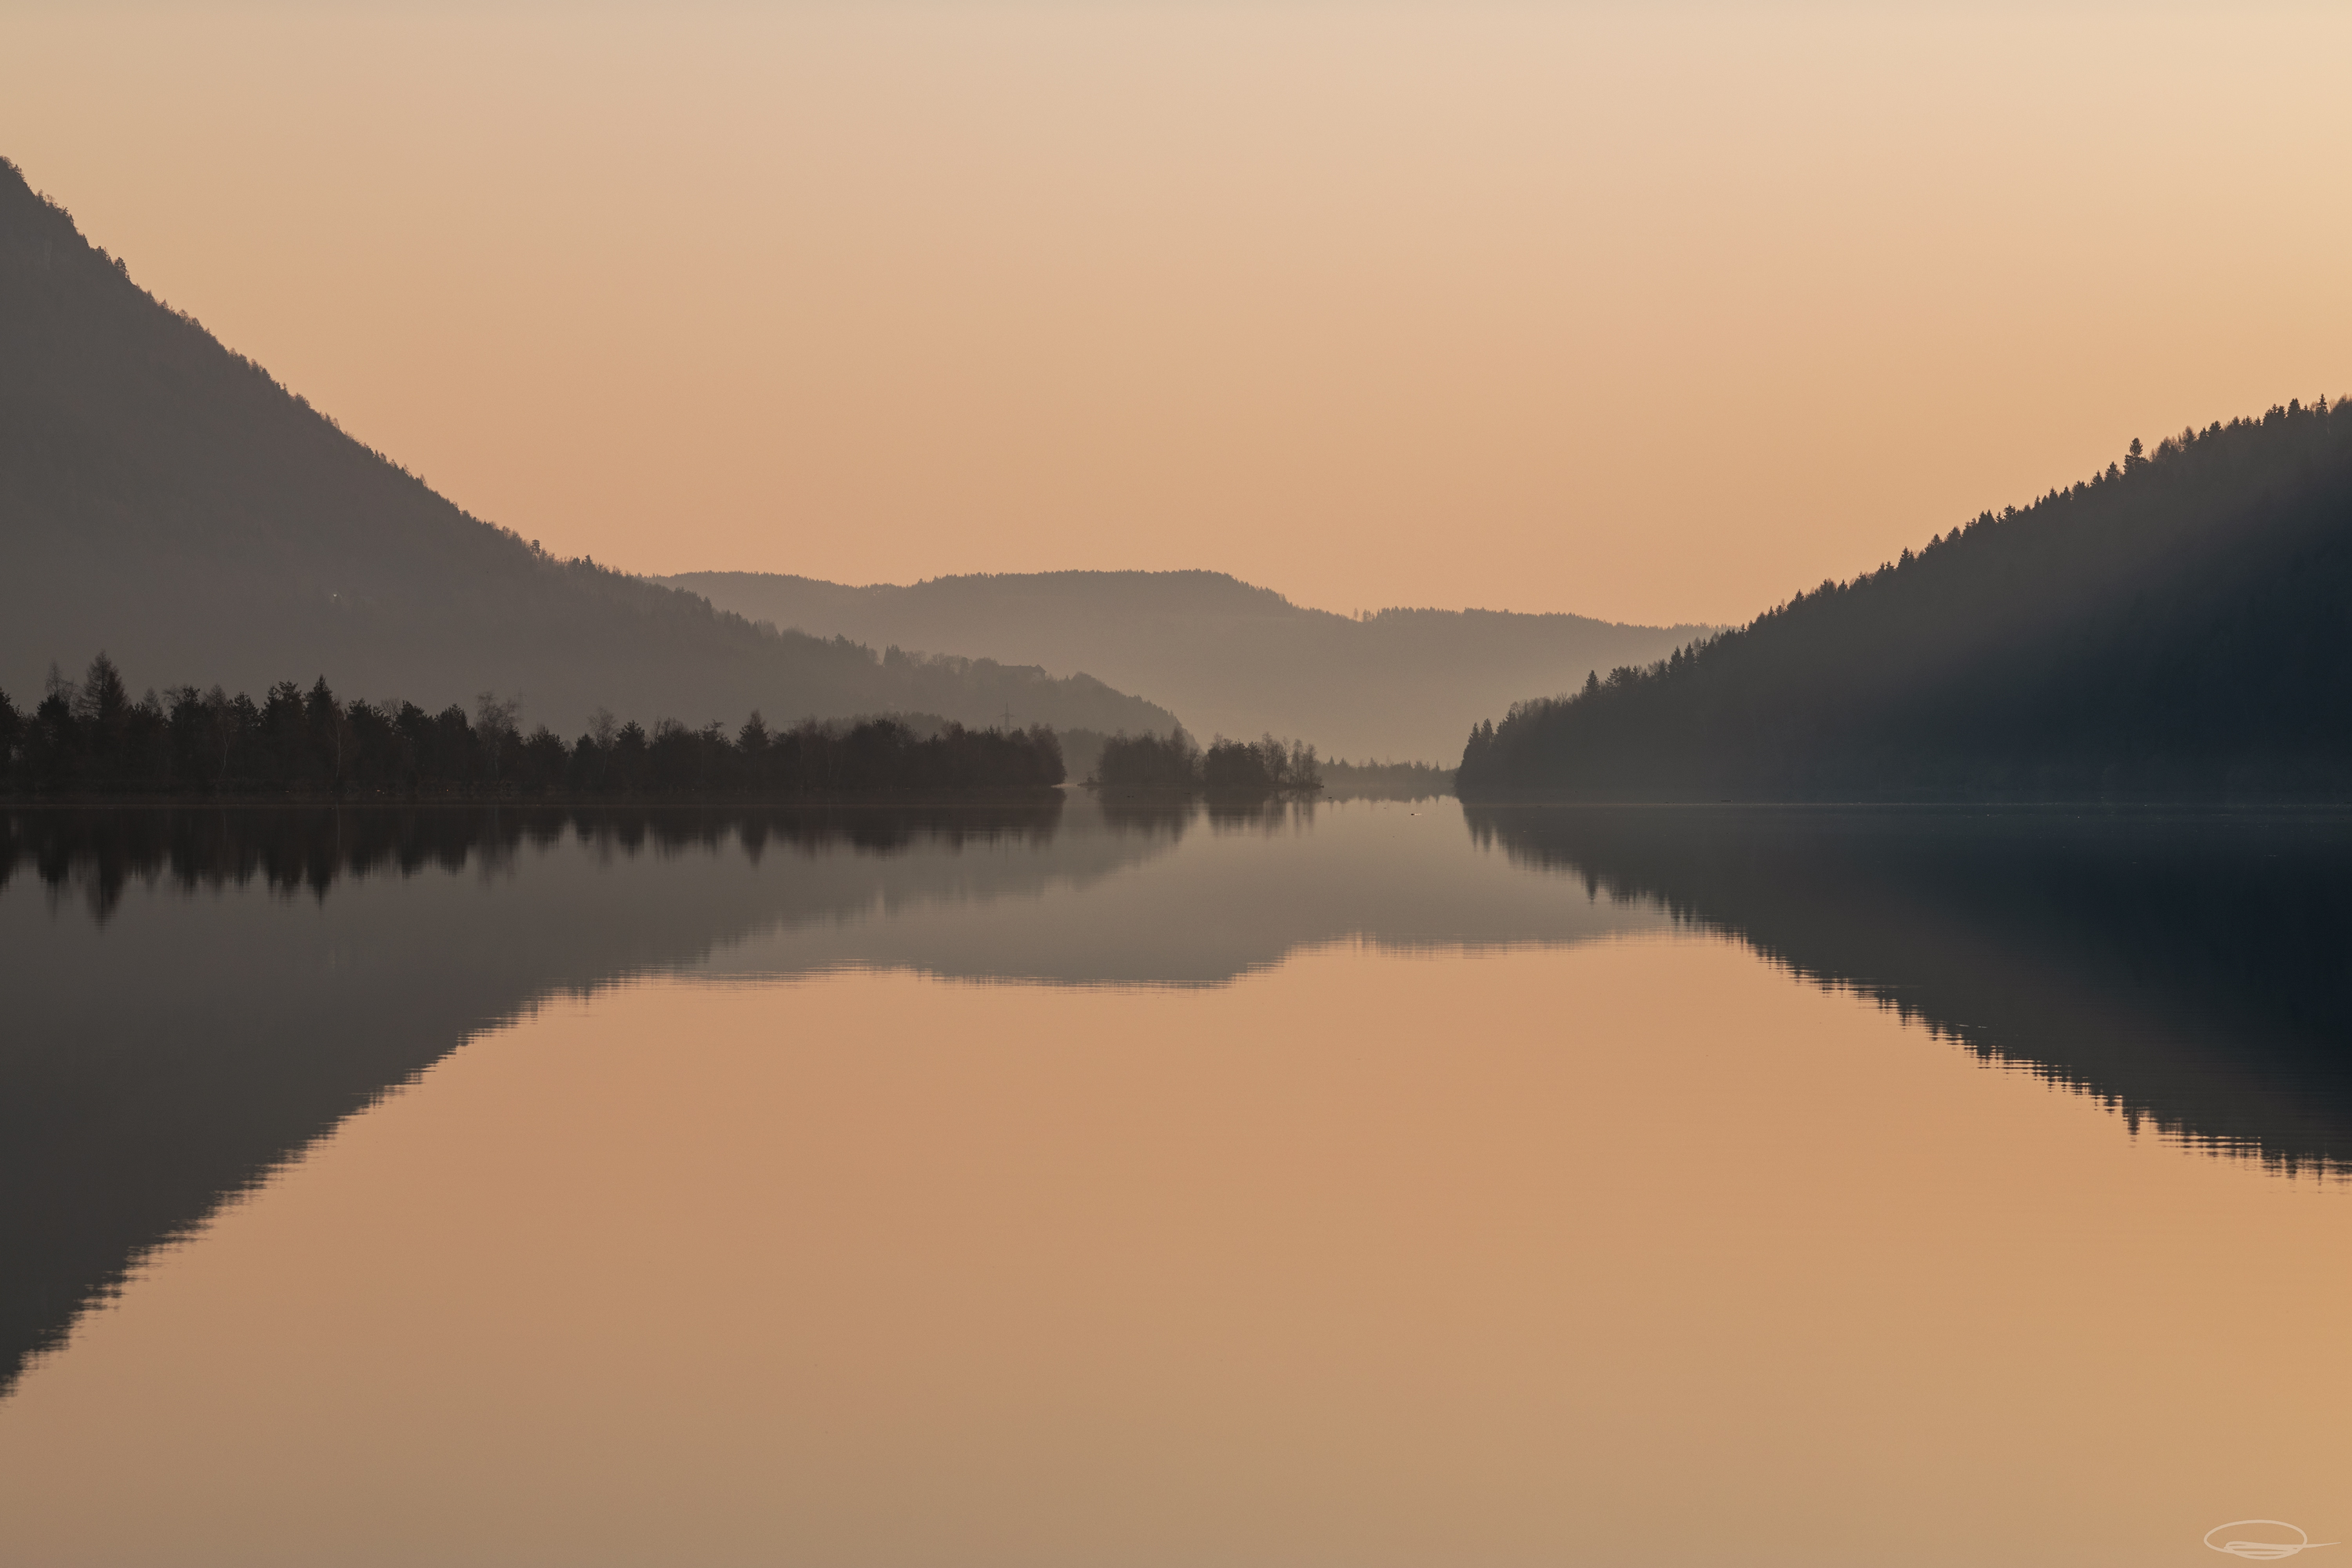 Sunrise at a calm lake